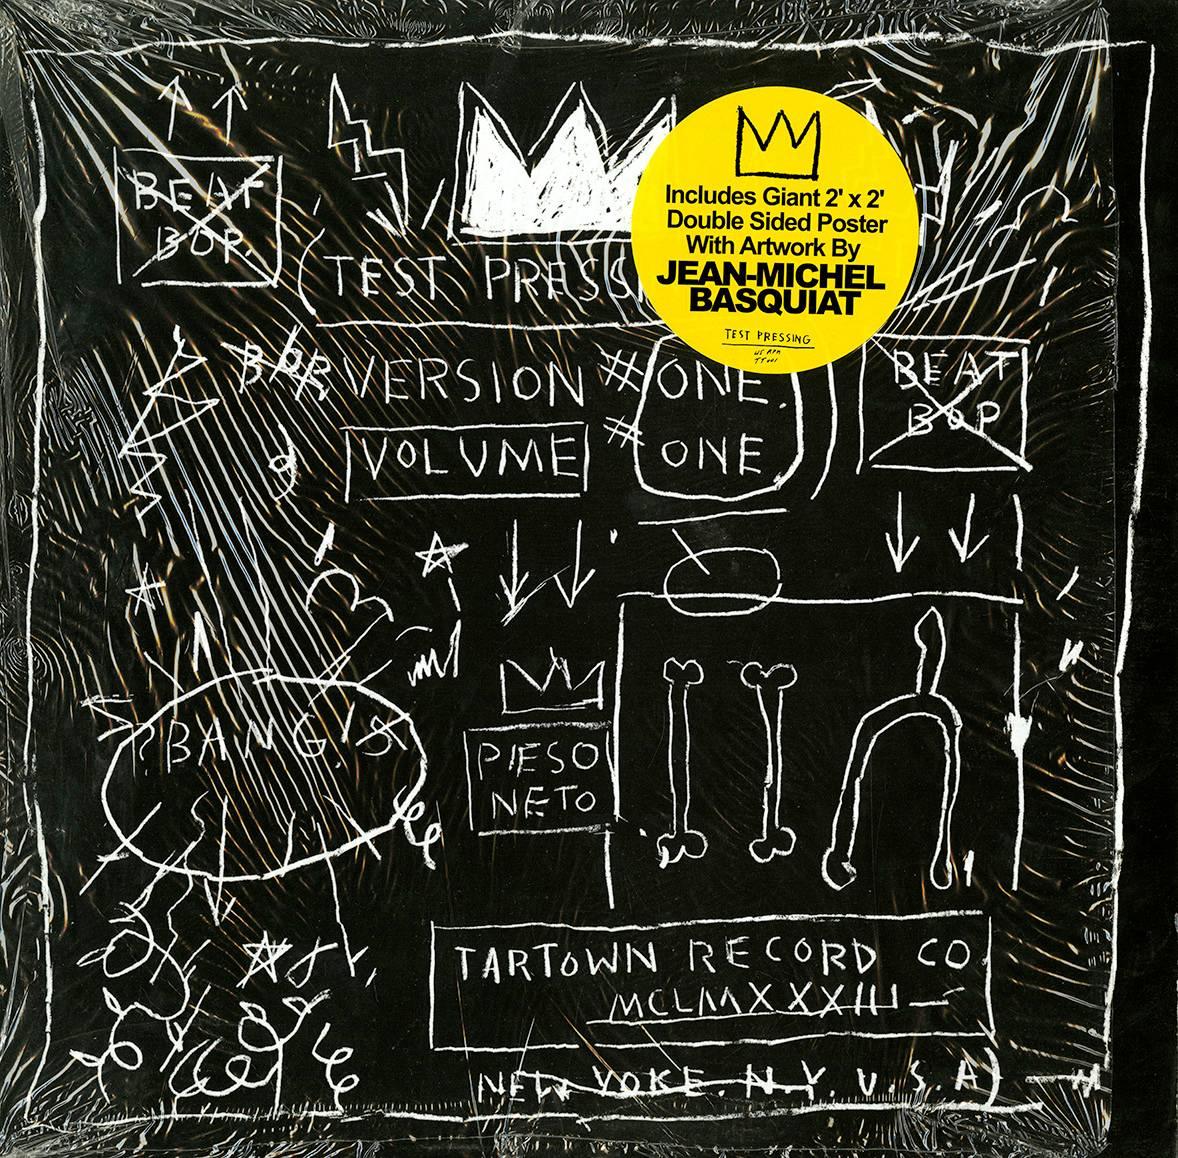 Basquiat Beat Bop record art and poster (Basquiat album art)  - Print by (after) Jean-Michel Basquiat